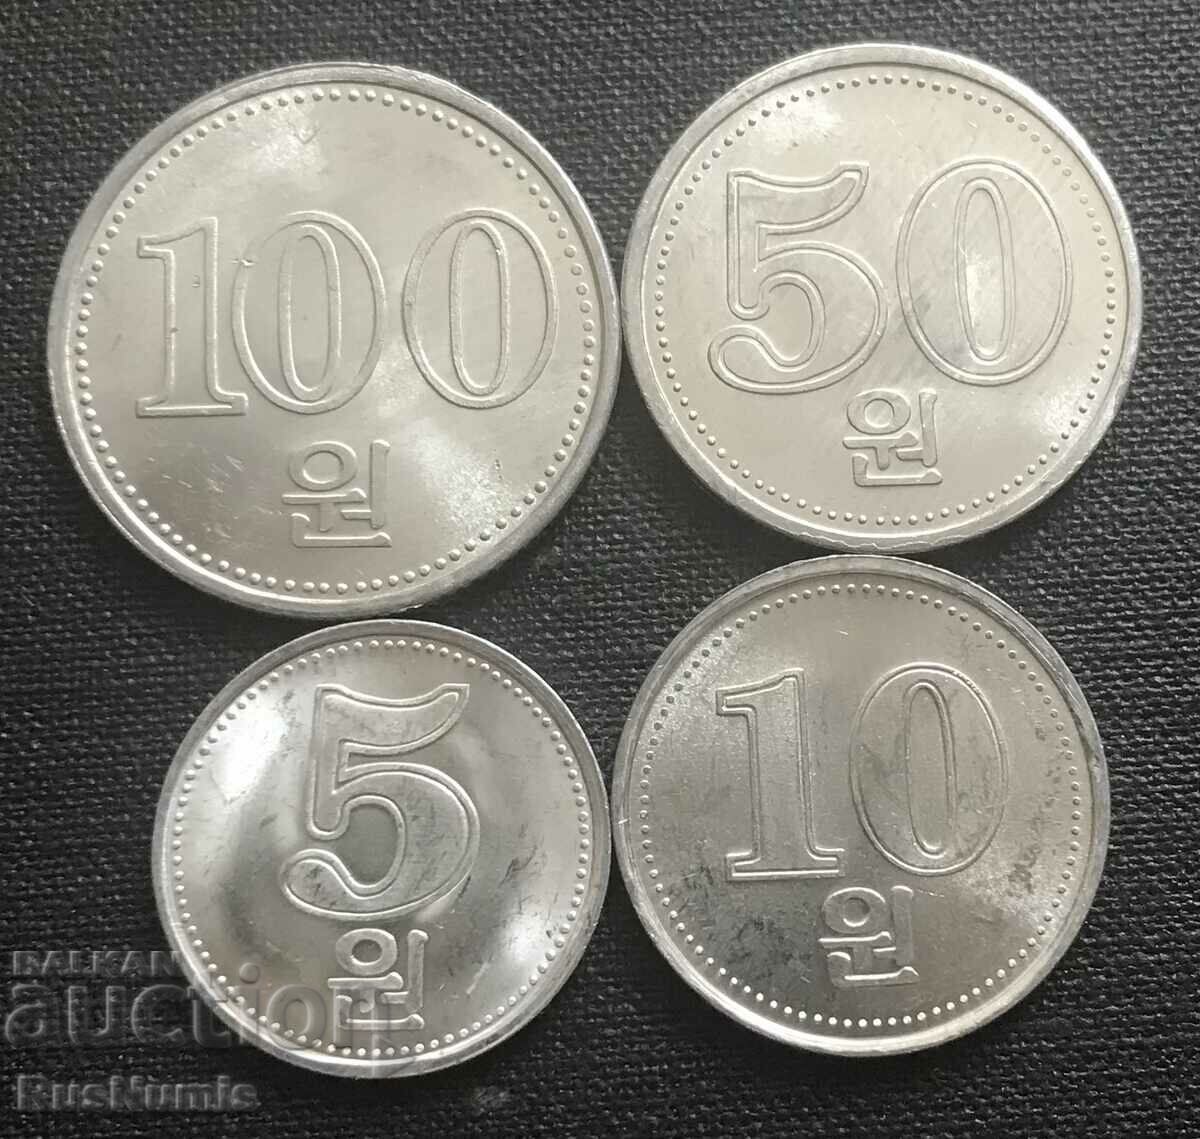 North Korea. Exchange Coin Lot 2005 UNC.